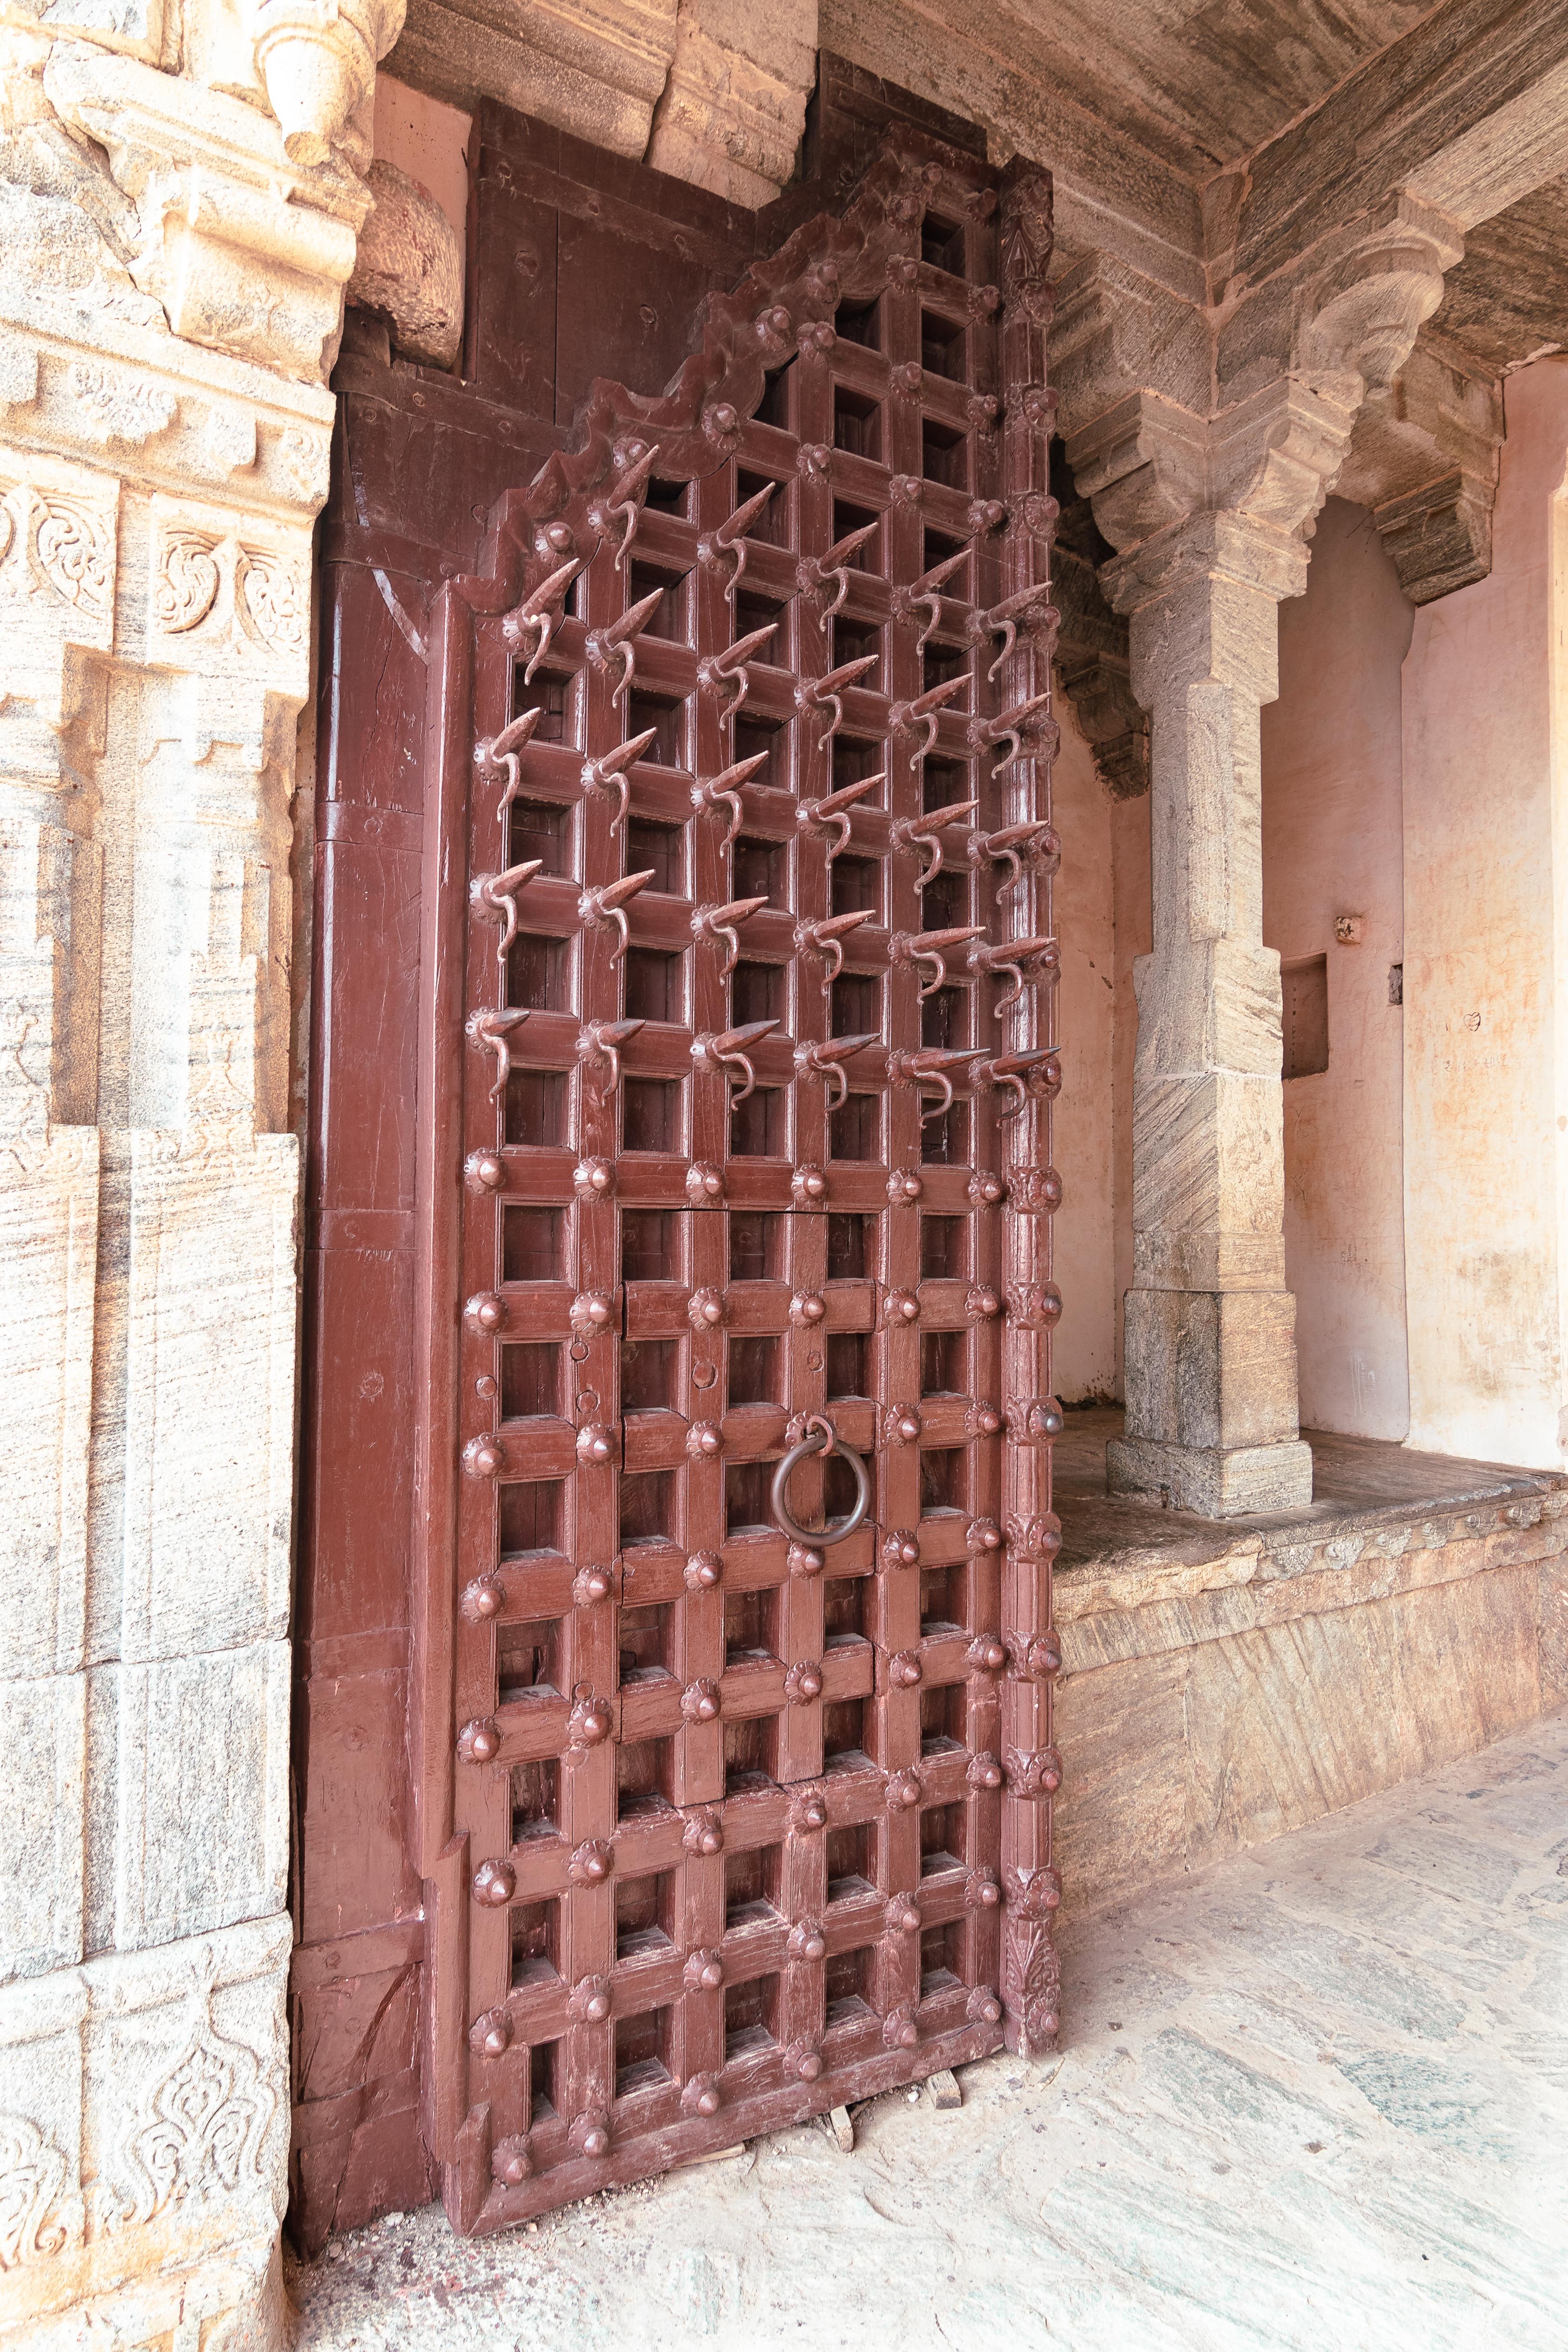 The spiked gates of Kumbhalgarh Fort